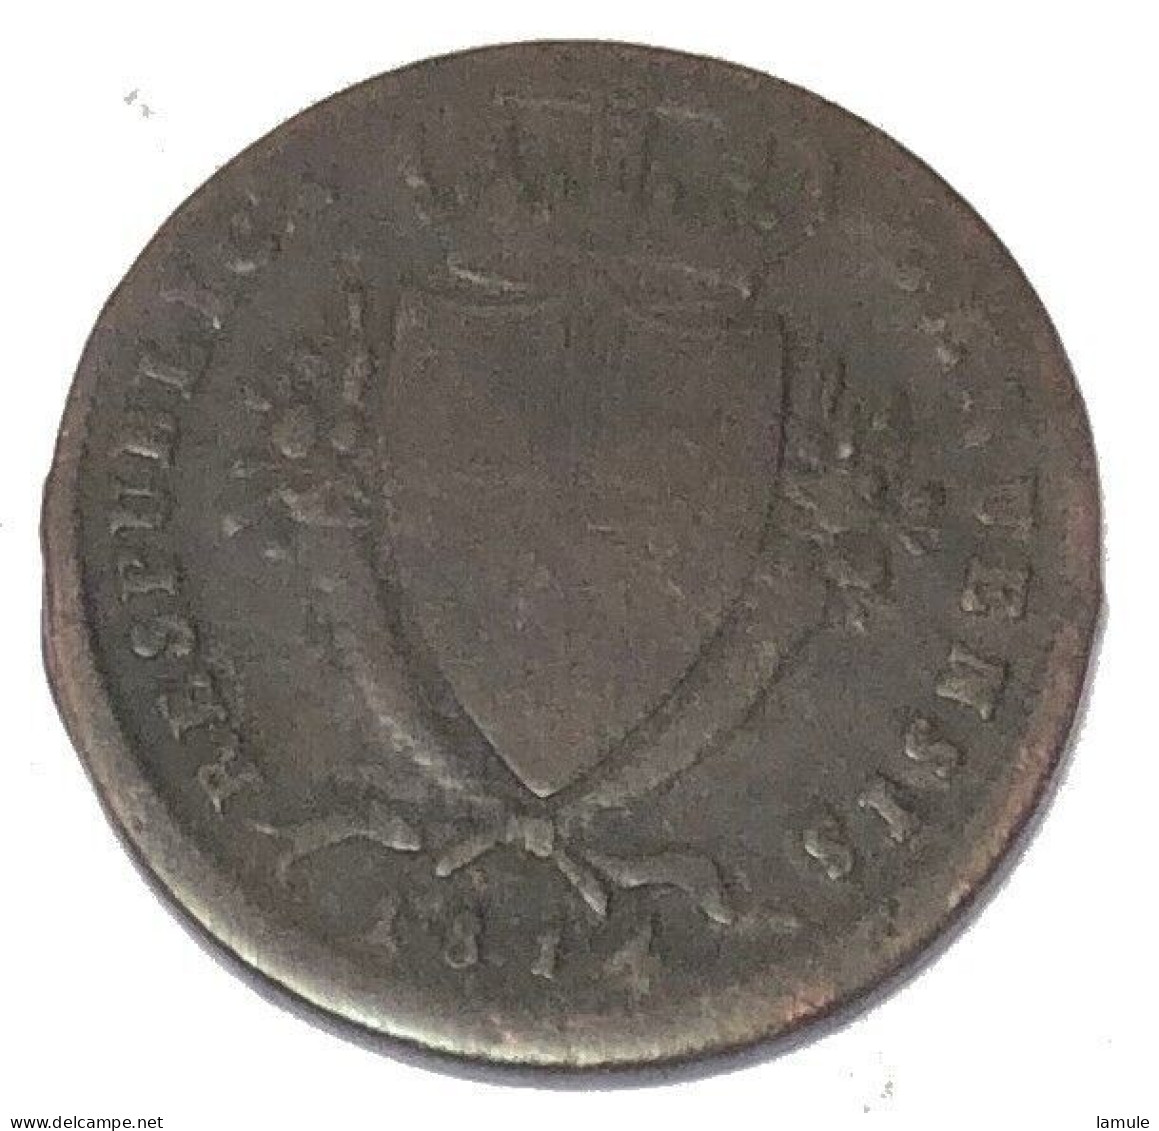 2 Soldi, République Genes, Italie 1813 M - Genua